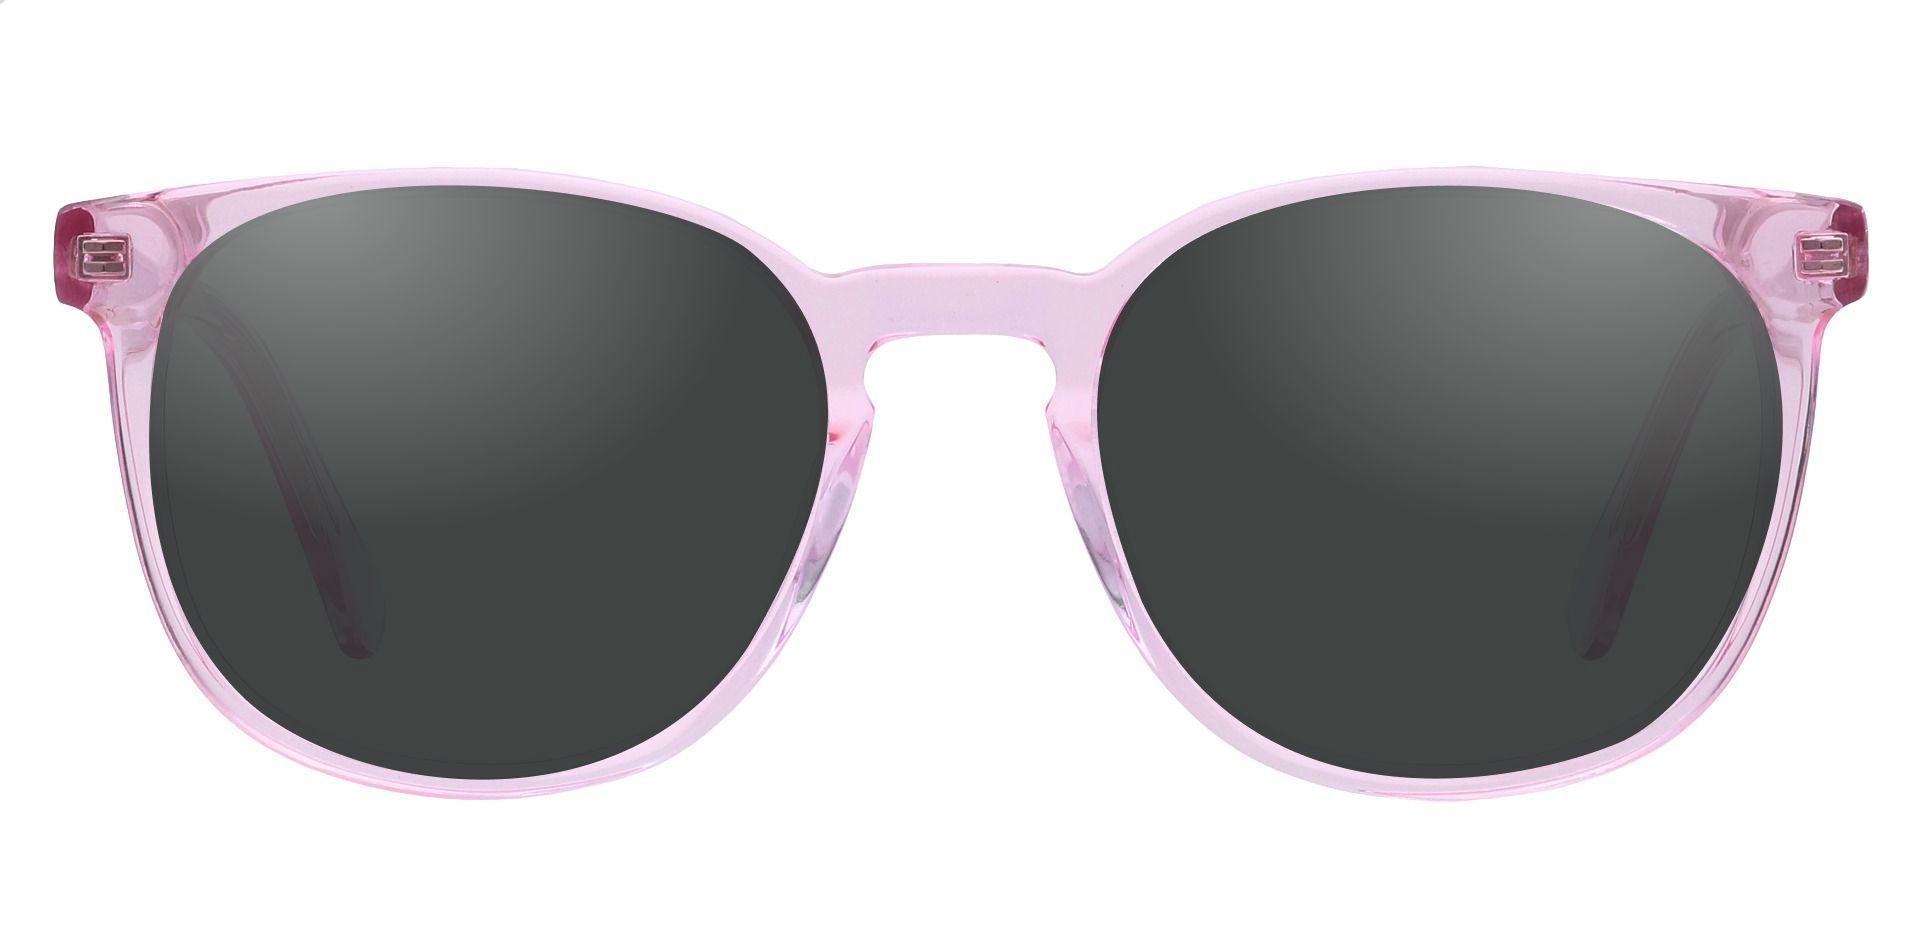 Nebula Round Reading Sunglasses - Pink Frame With Gray Lenses